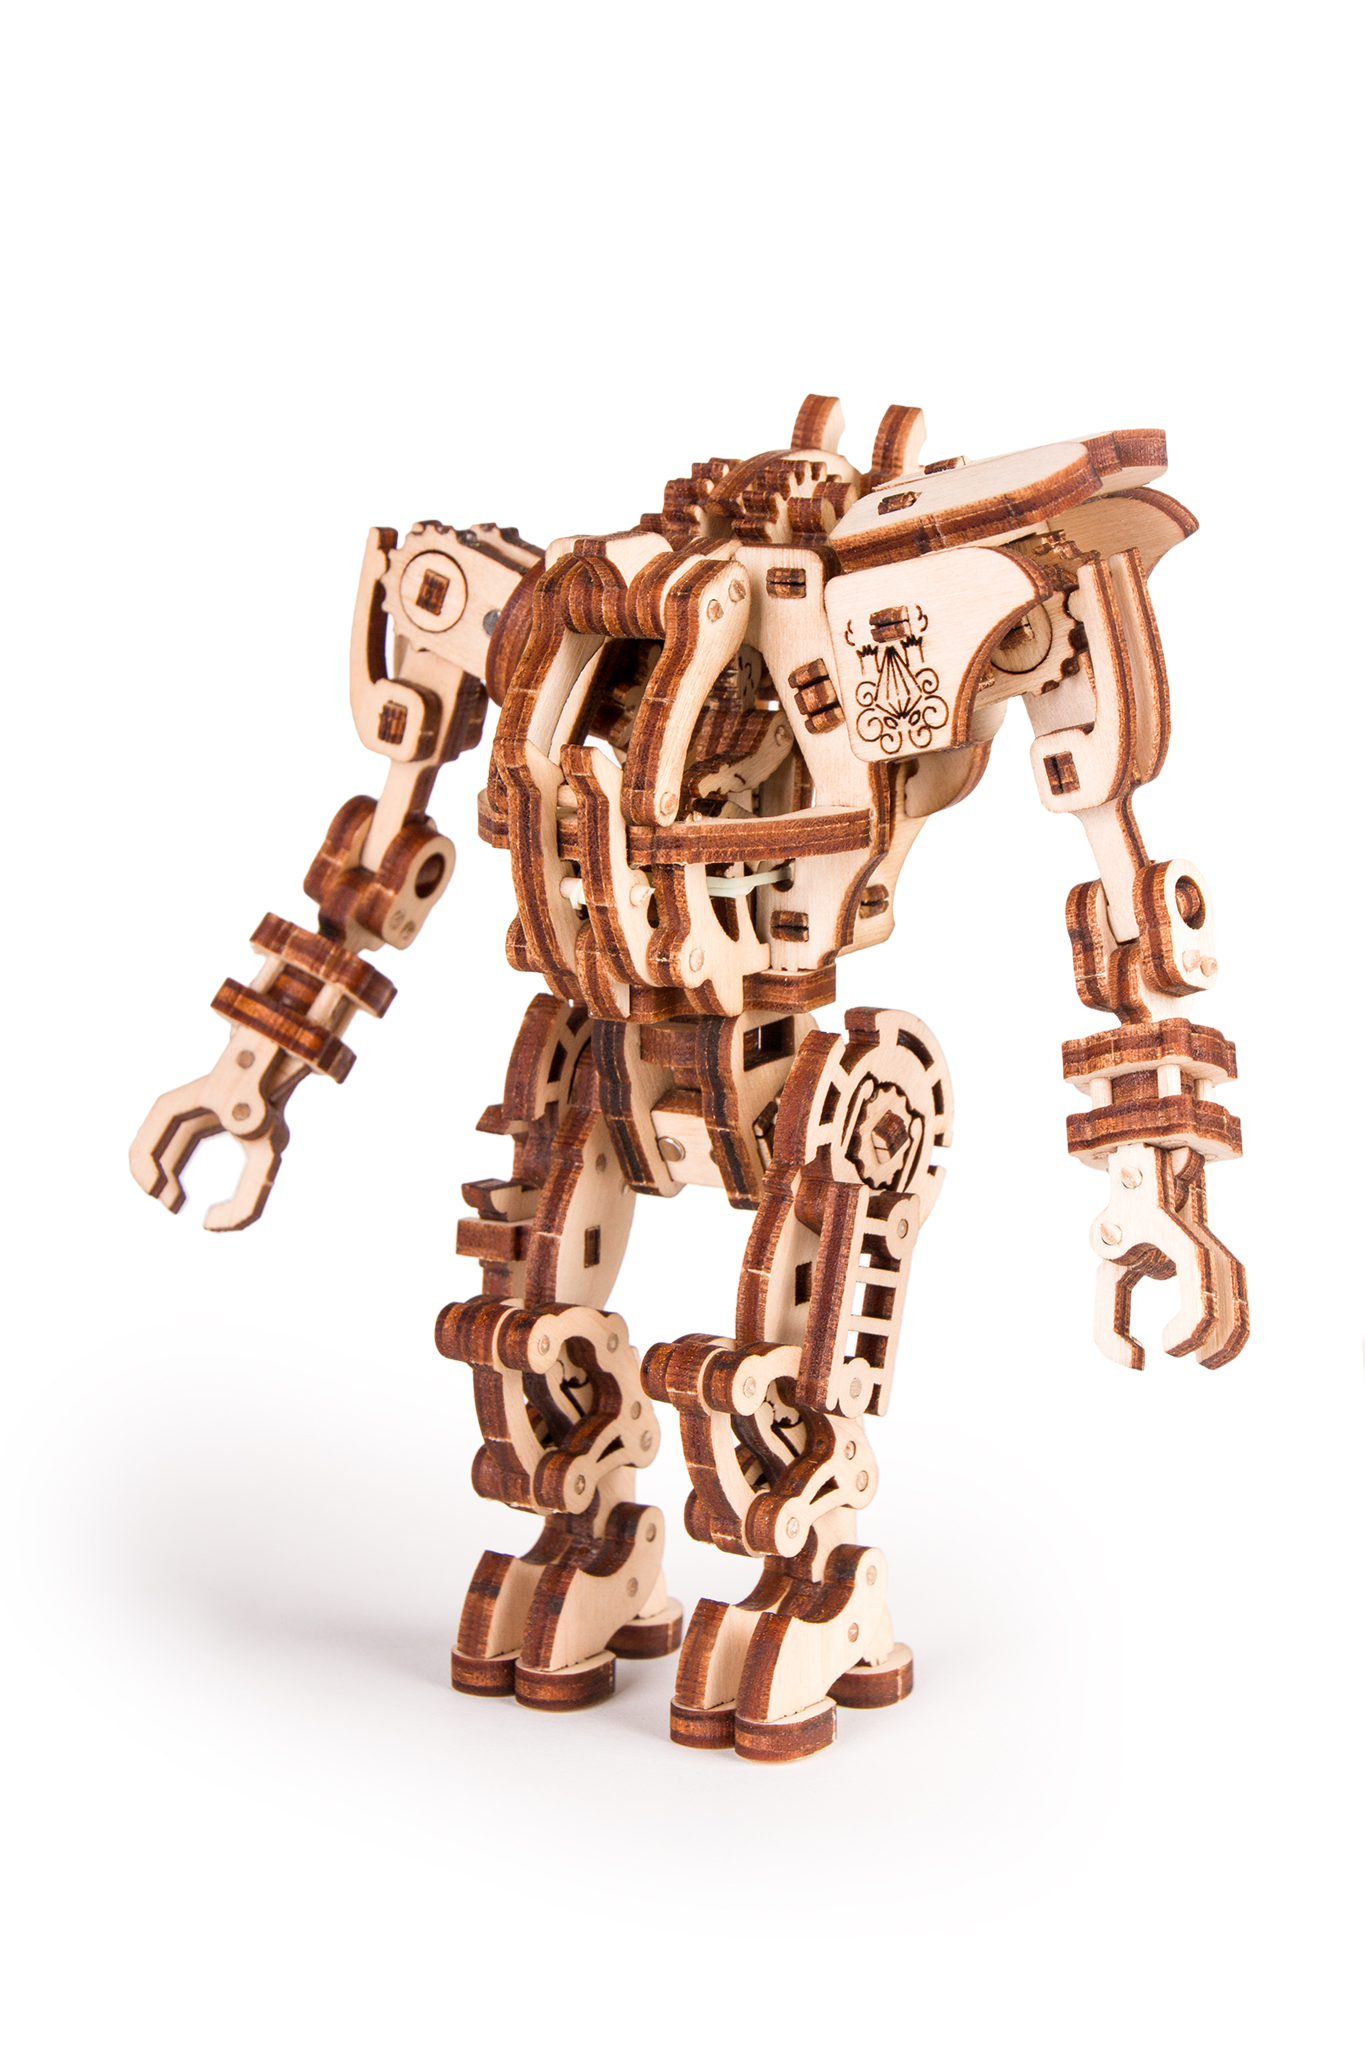 Time For Machine Prometheus Robot Wooden 3d Puzzle Mechanical